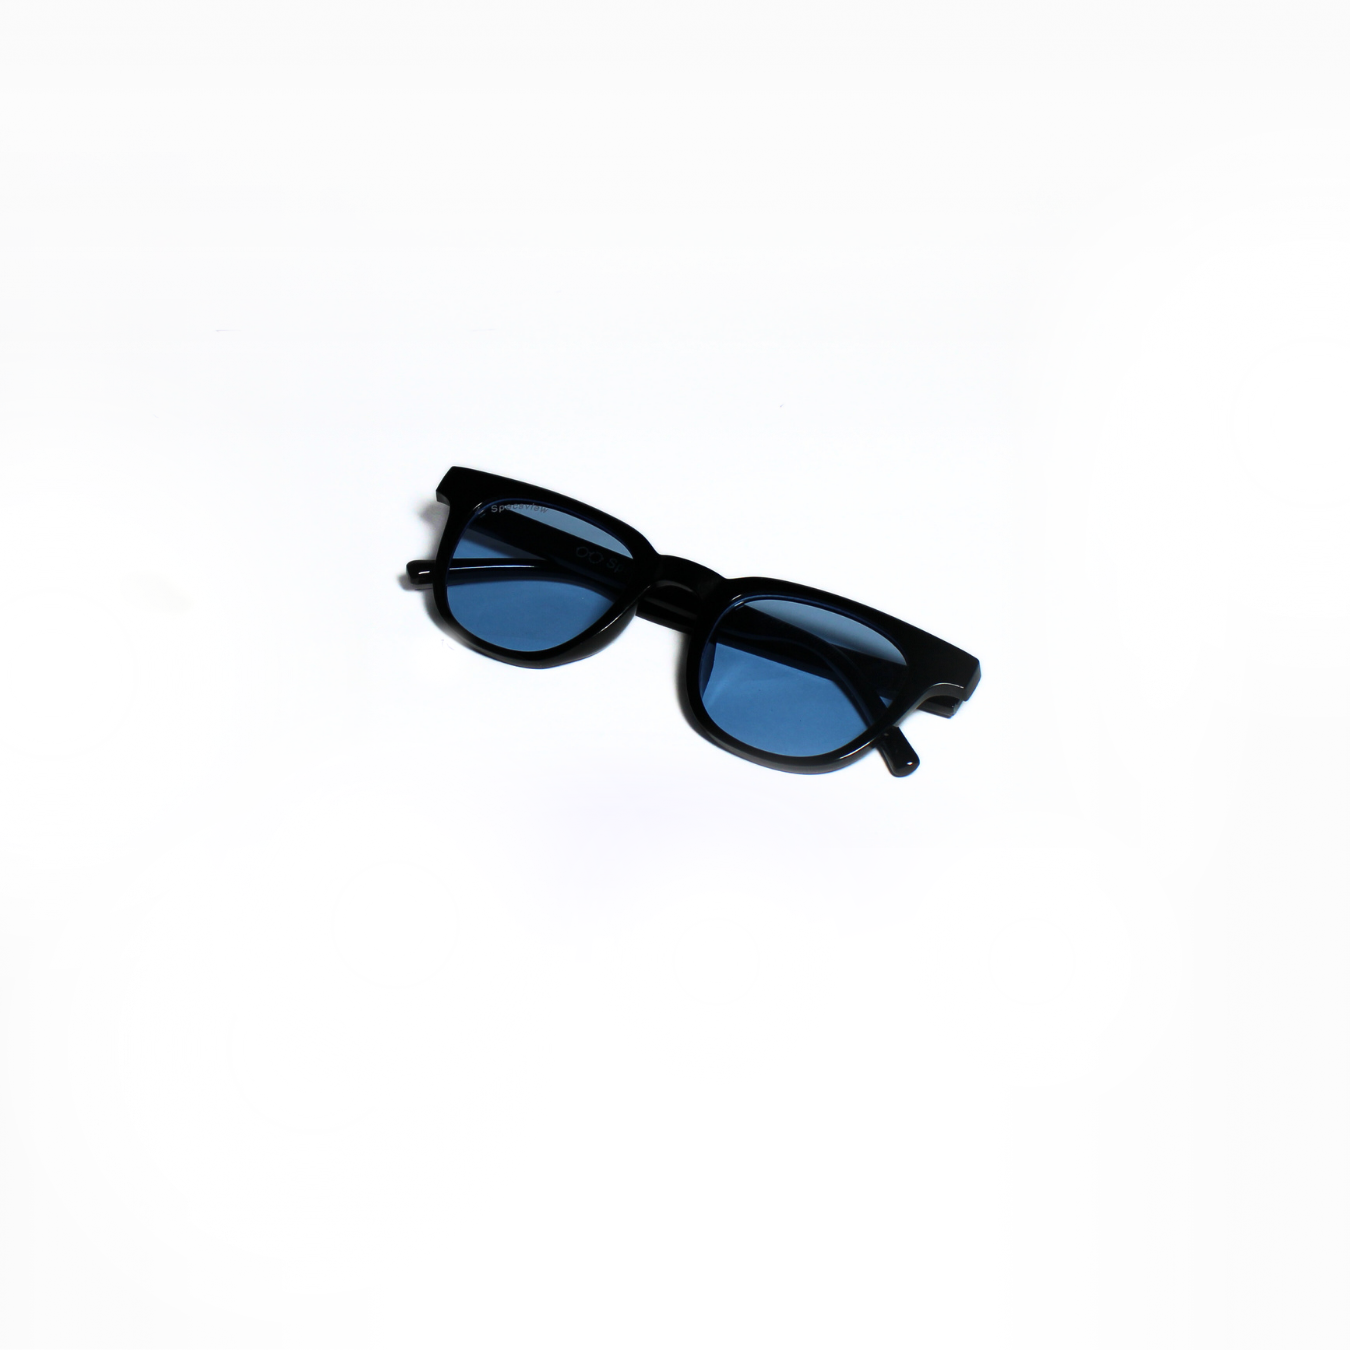 DAPHNE//003 I Sunglasses for Men and Women - Specsview